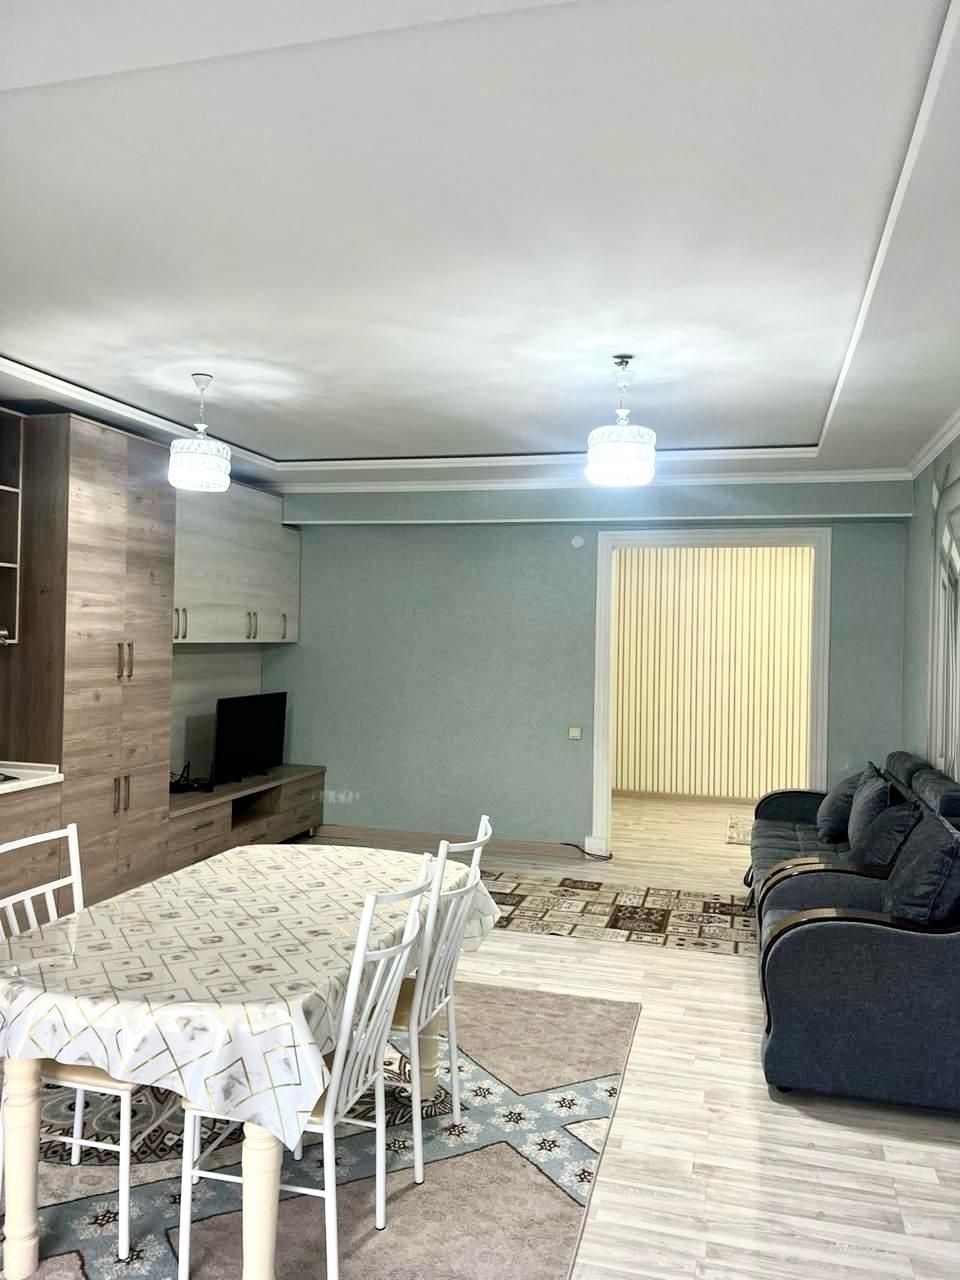 Благоустроенная 2-х комнатная квартира в ЖК "SAPFIR", ул.Байтурсвнова.